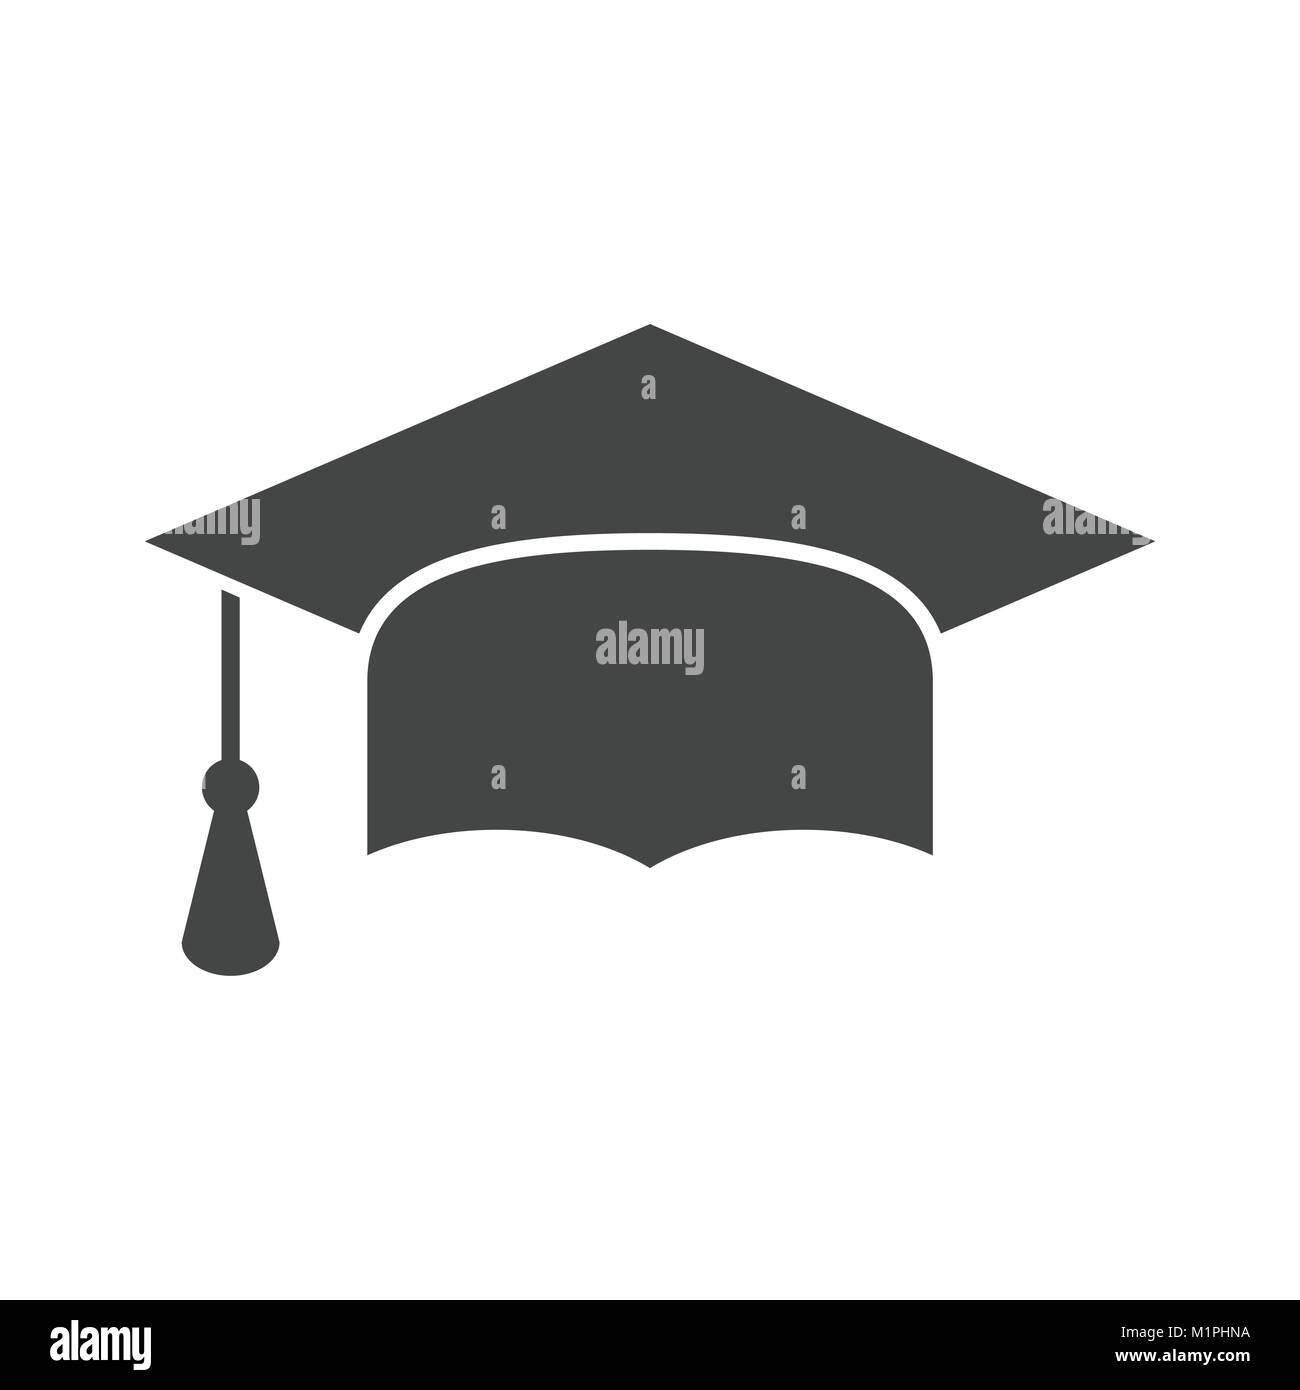 Graduation cap flat design icon. Finish education symbol. Graduation day celebration element. Graduation cap vector illustration on black background. Stock Vector